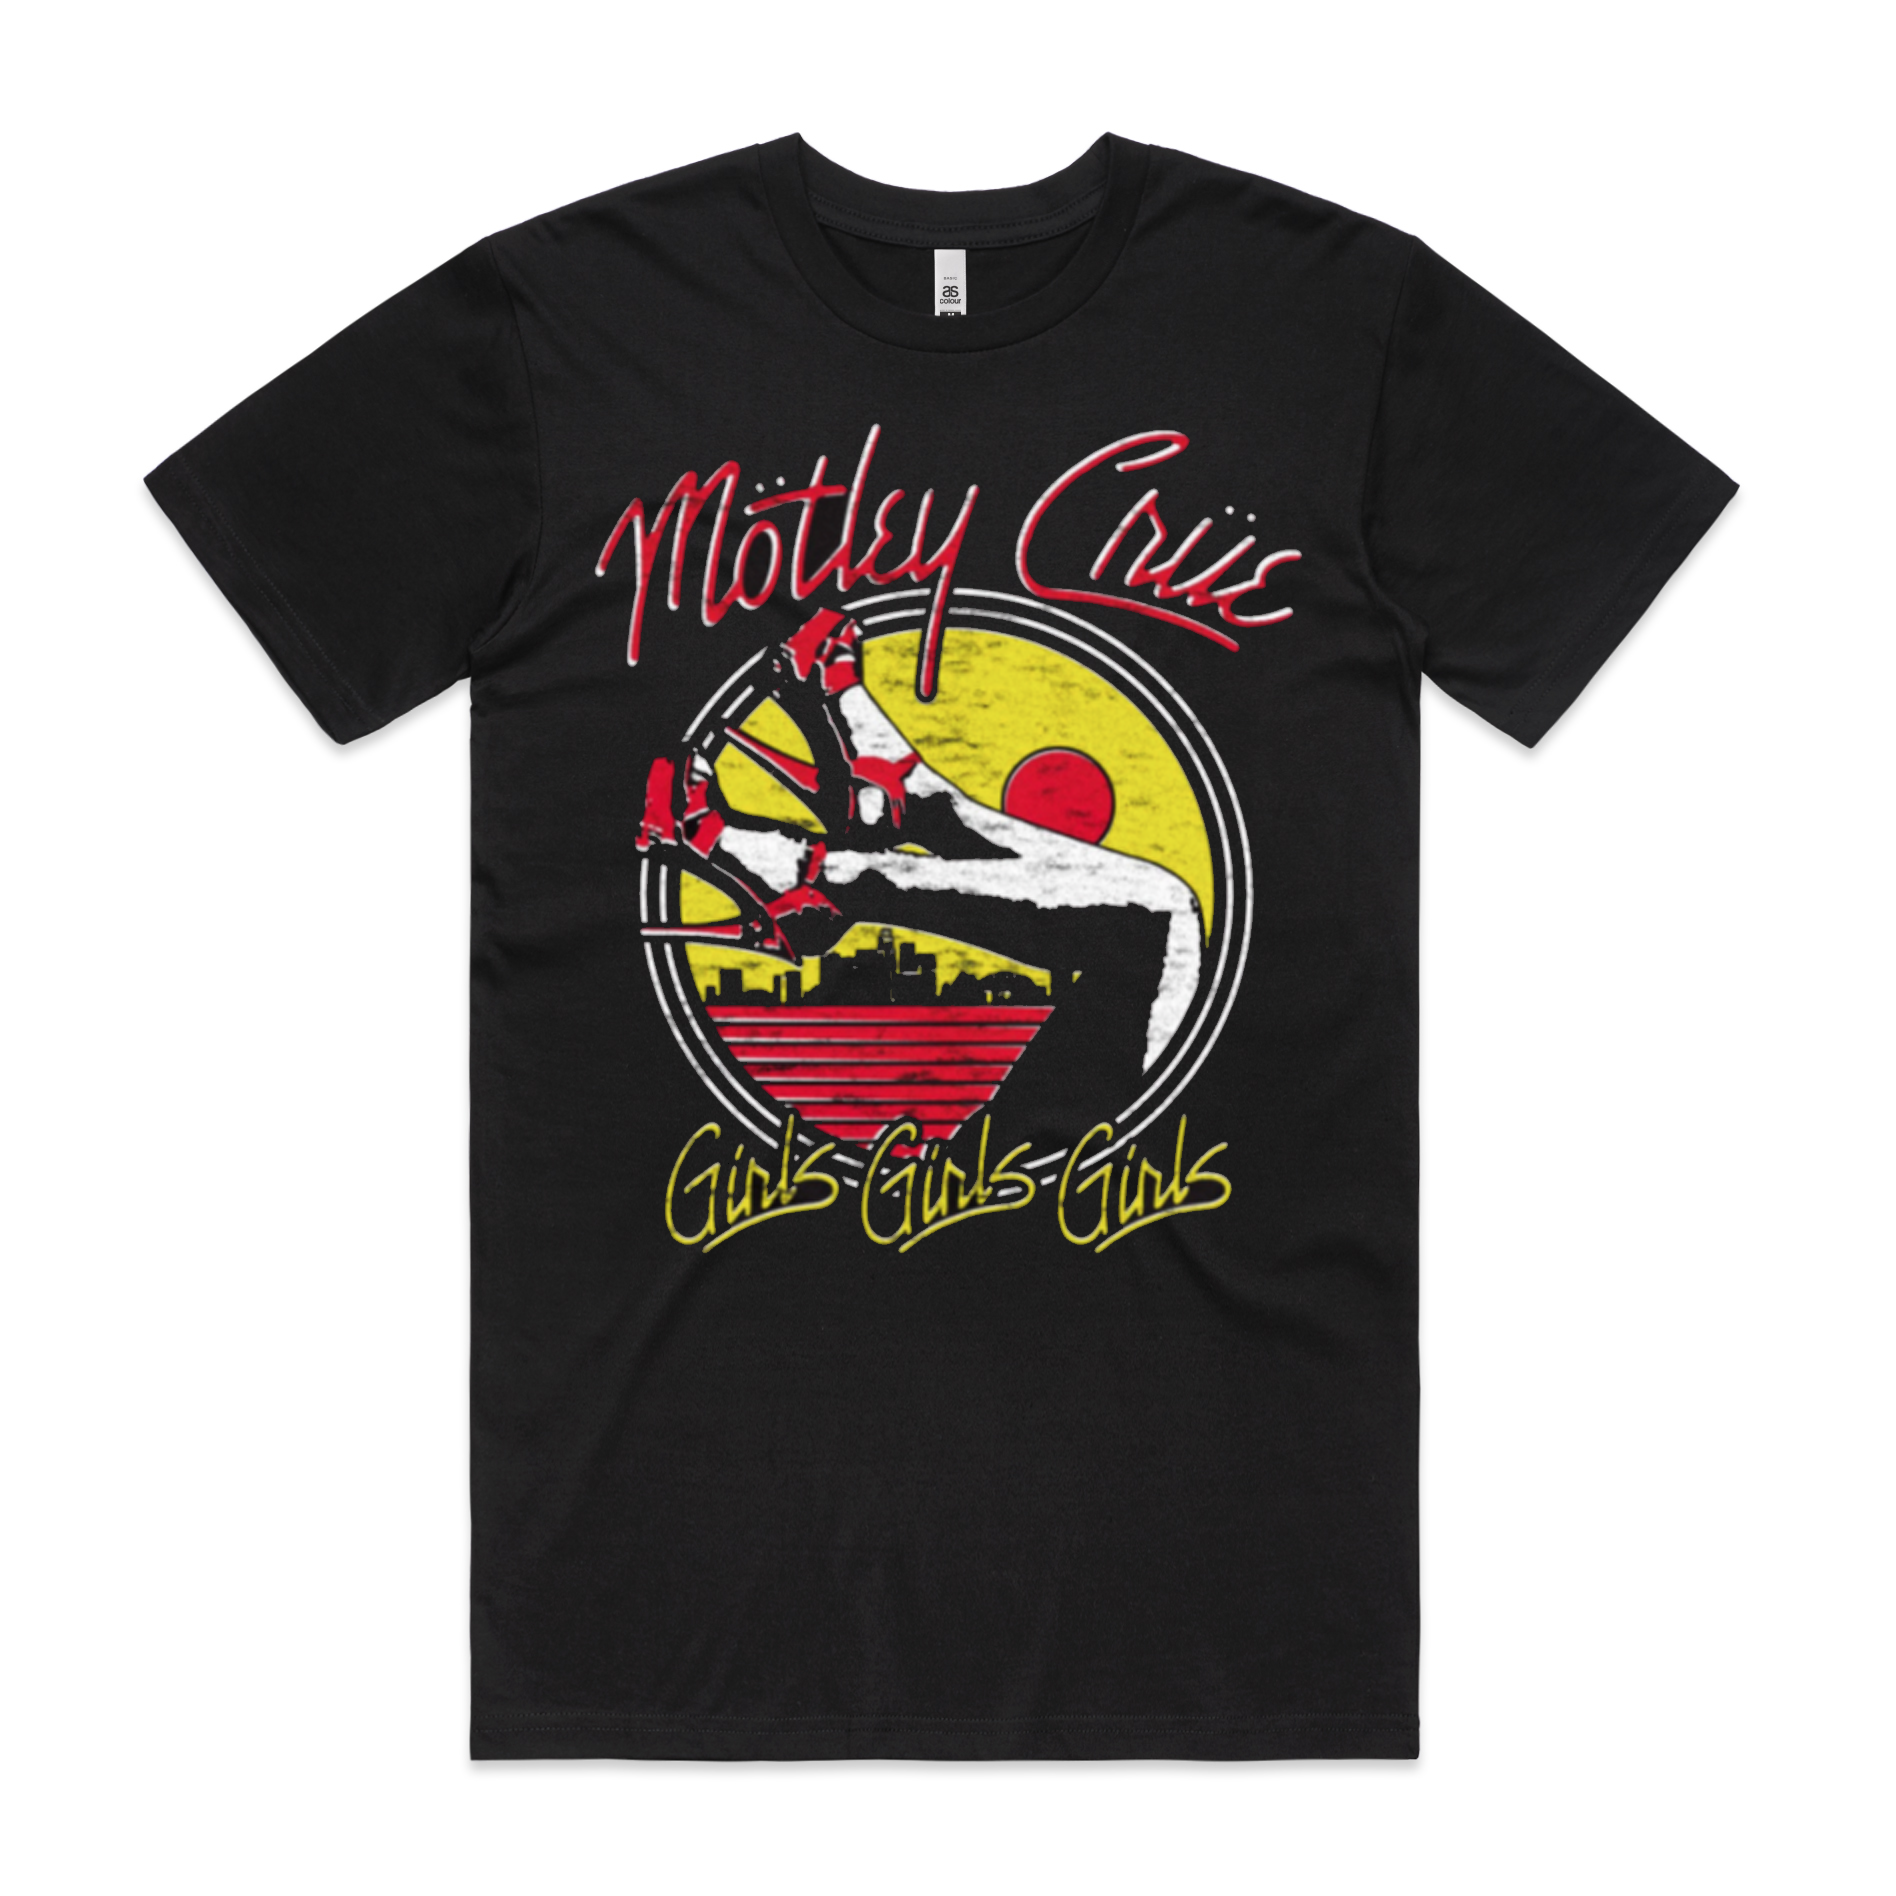 MOTLEY CRÜE 'Girls Girls Girls' T-Shirt